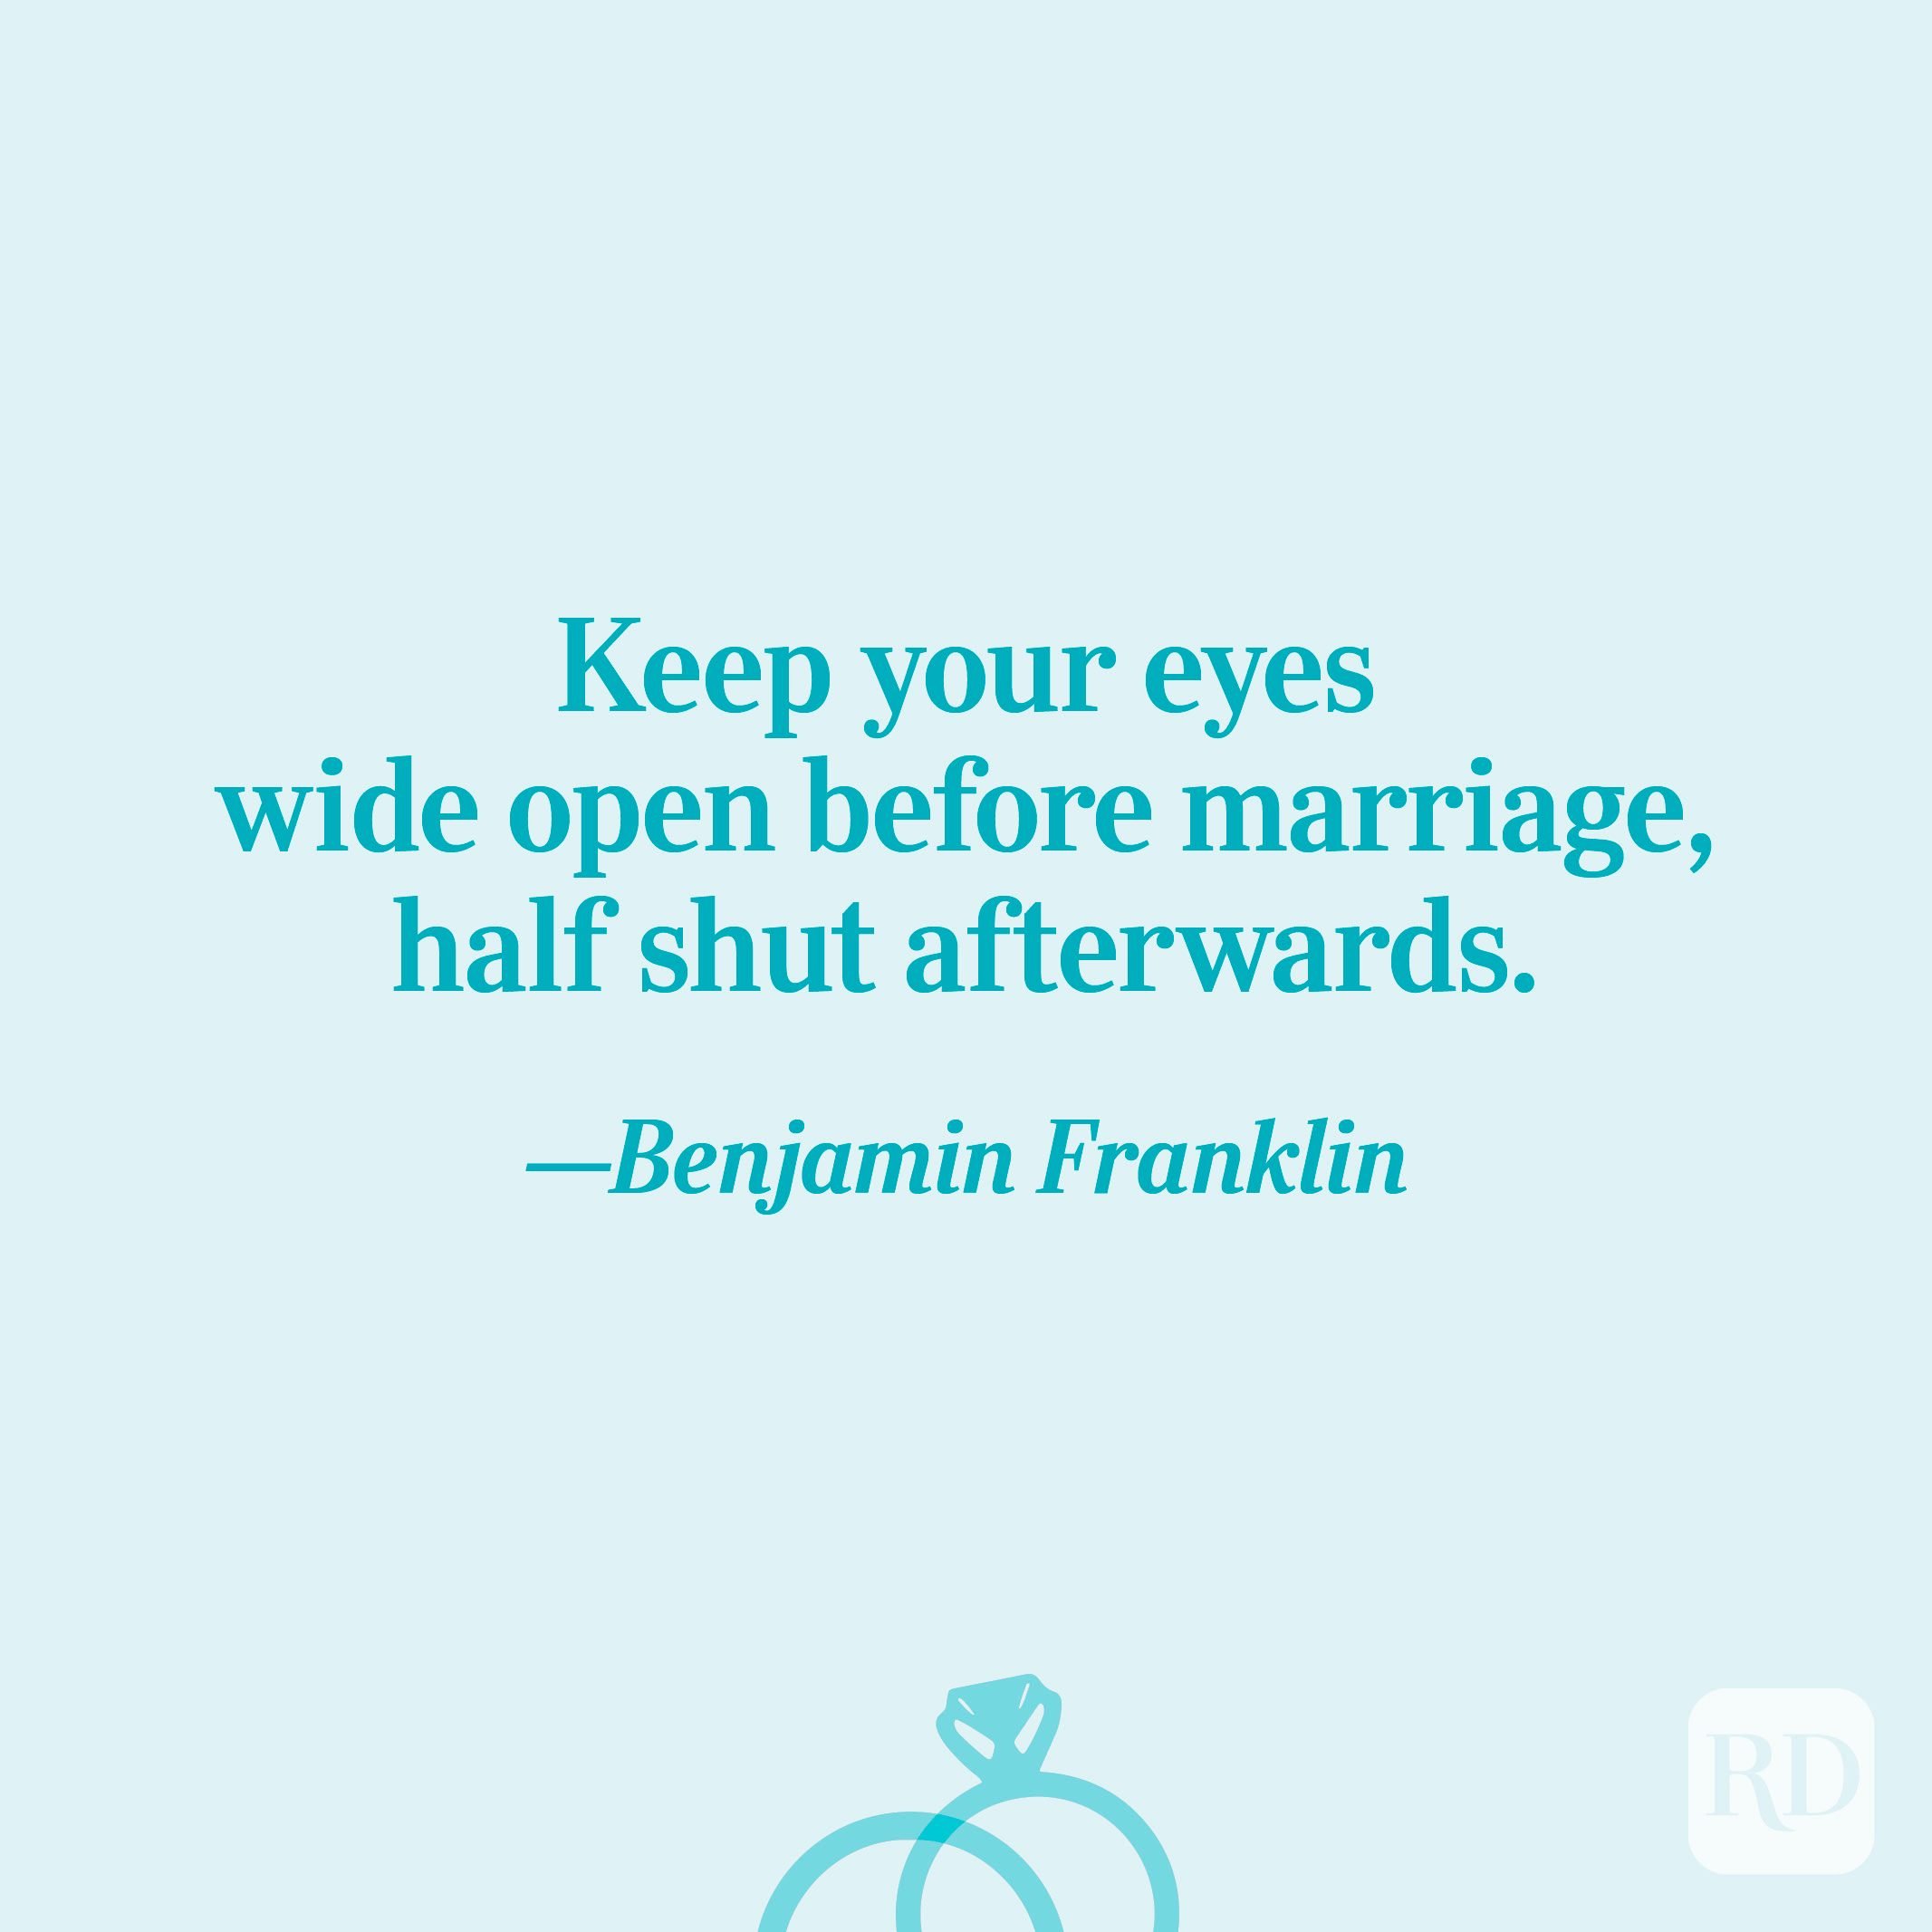 “Keep your eyes wide open before marriage, half shut afterwards.”—Benjamin Franklin